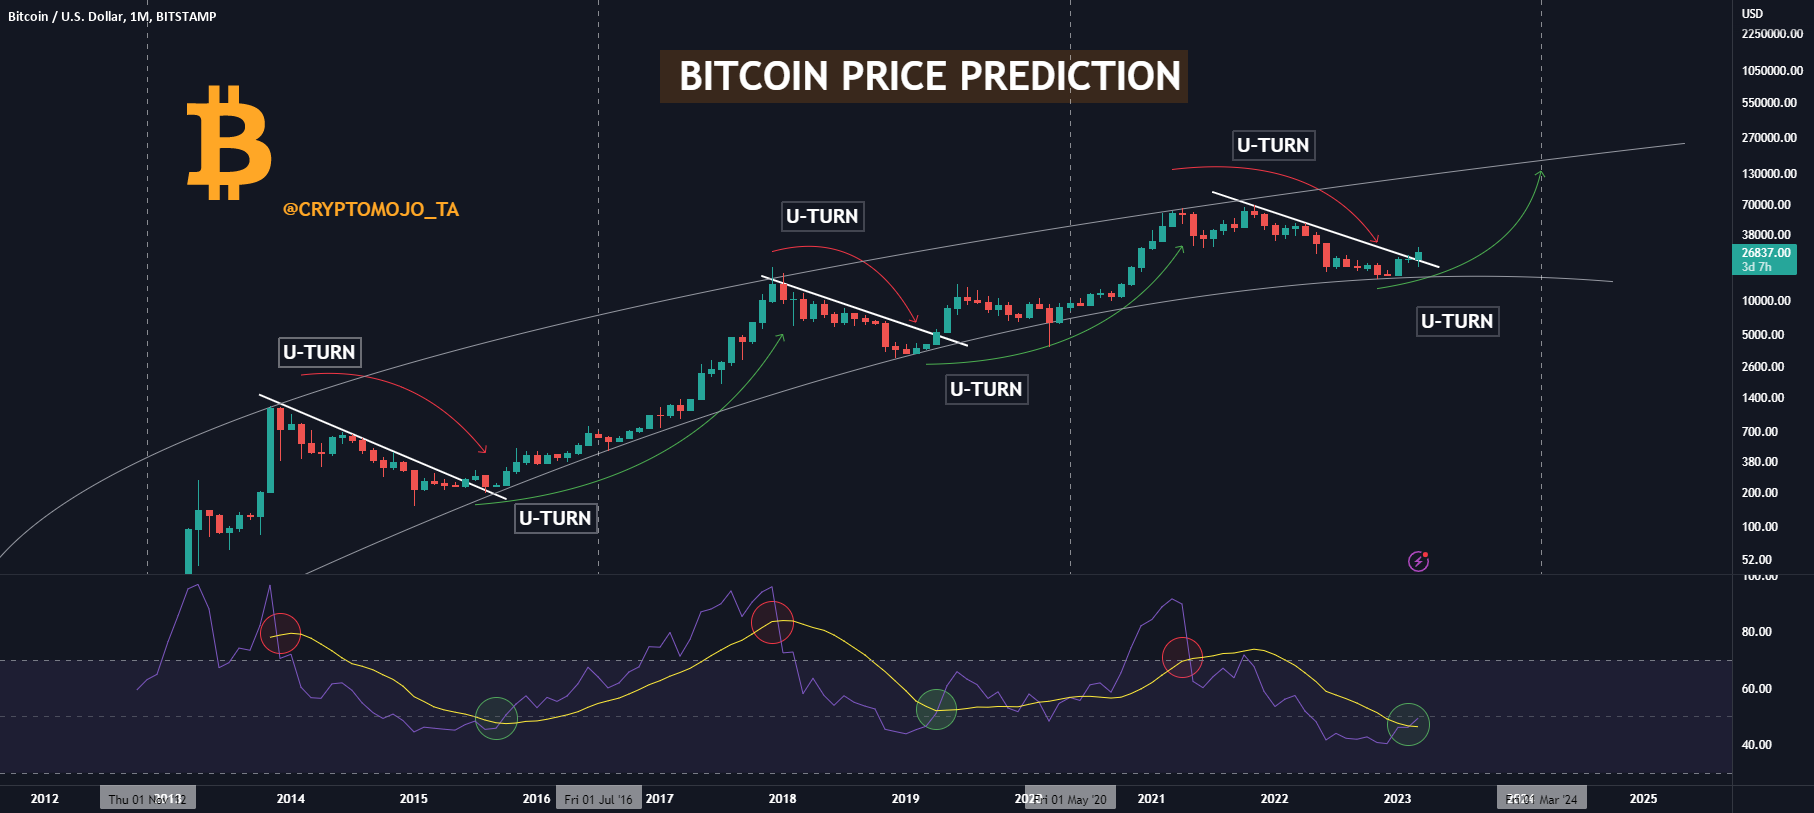 Bitcoin (BTC) Price Prediction - 